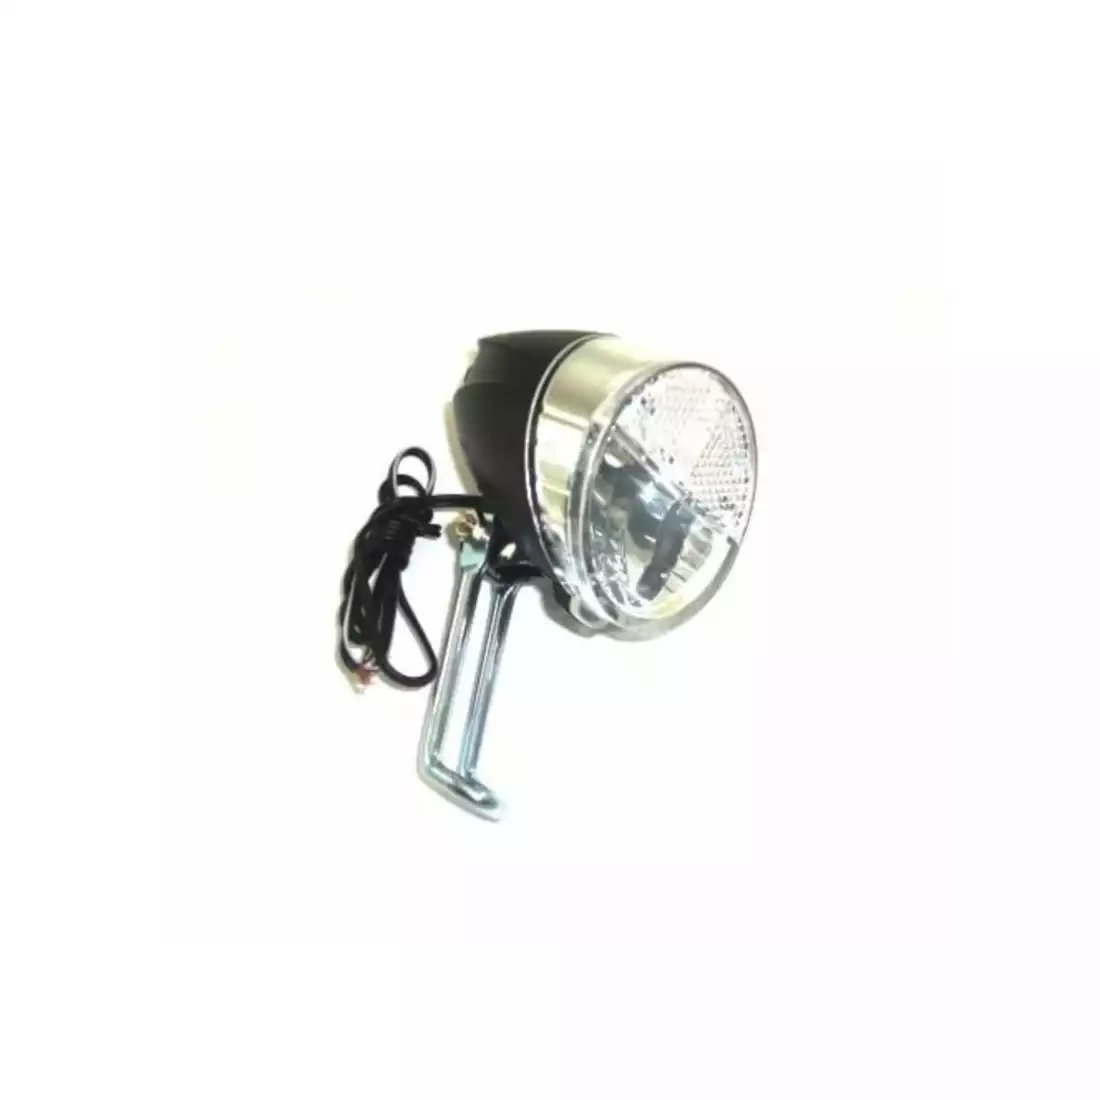 lampa rowerowa przednia JY-7006, srebrna